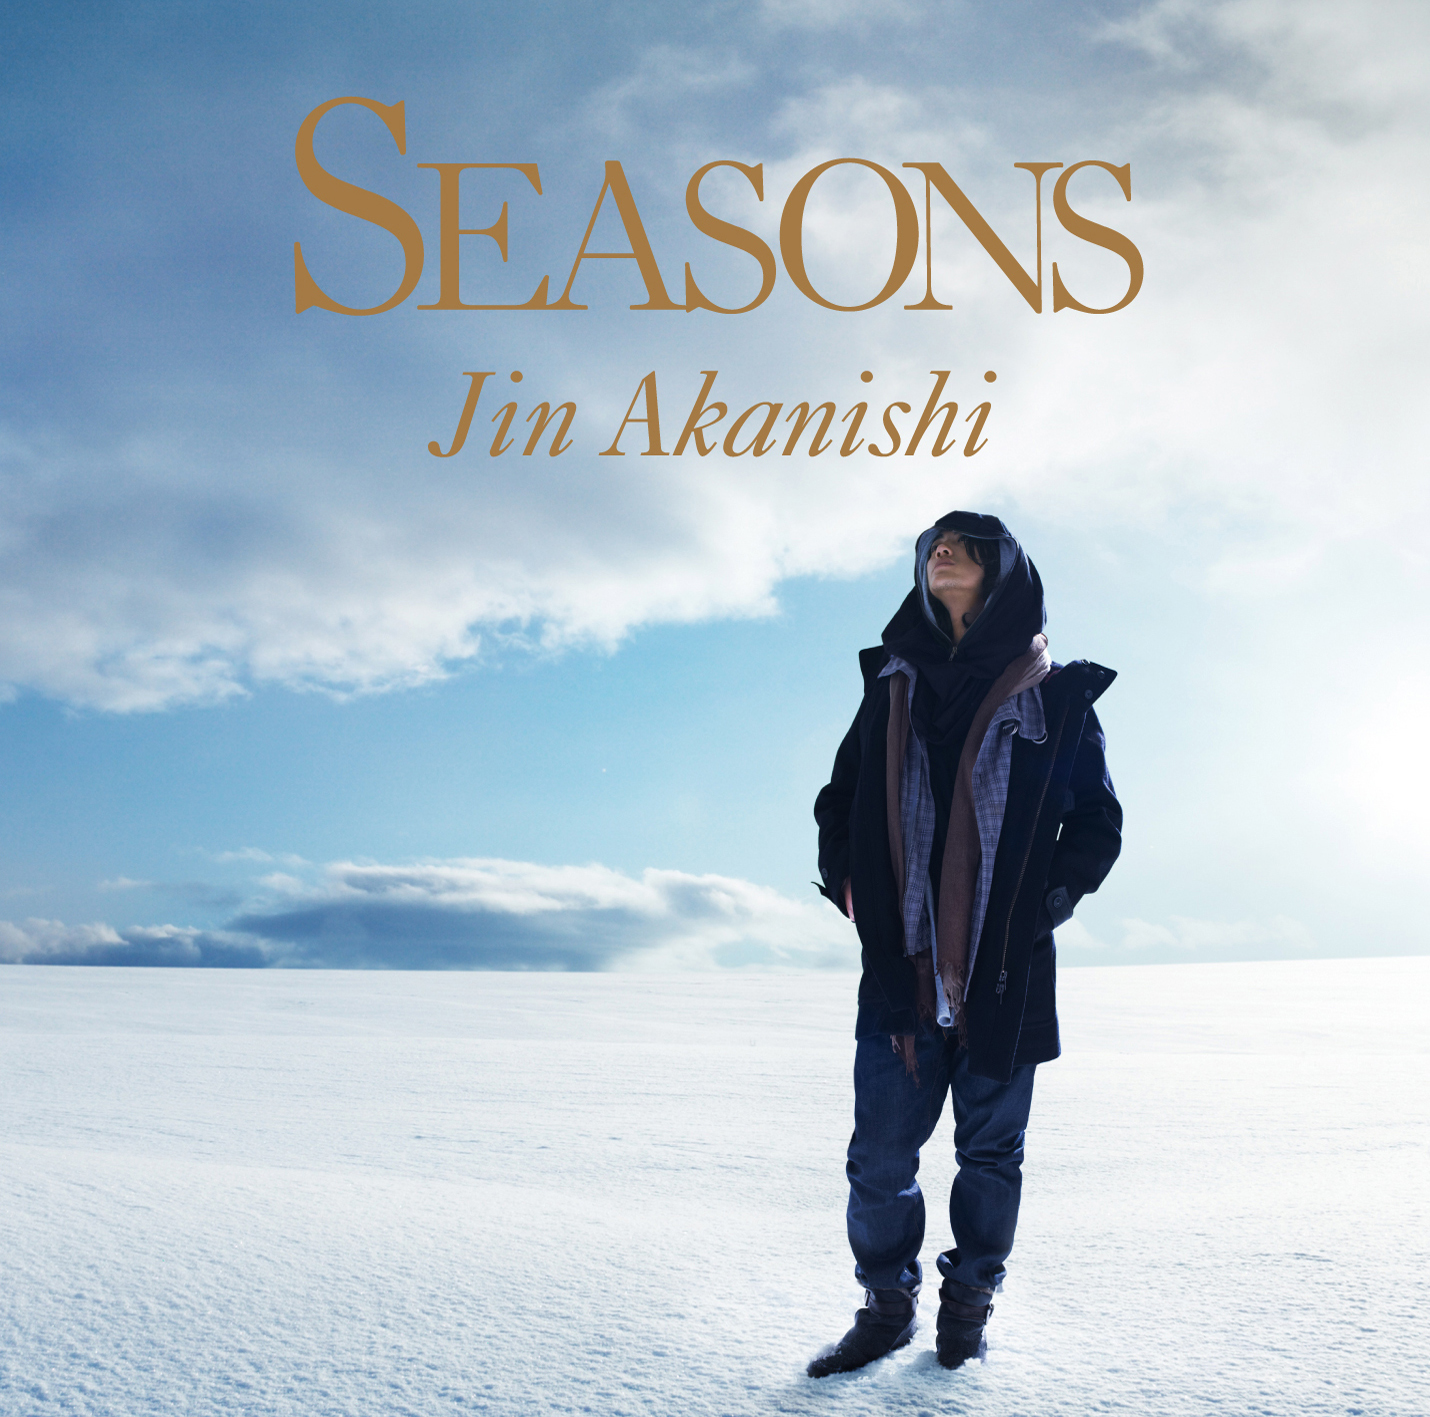 JIN AKANISHI 2011 CD COVER